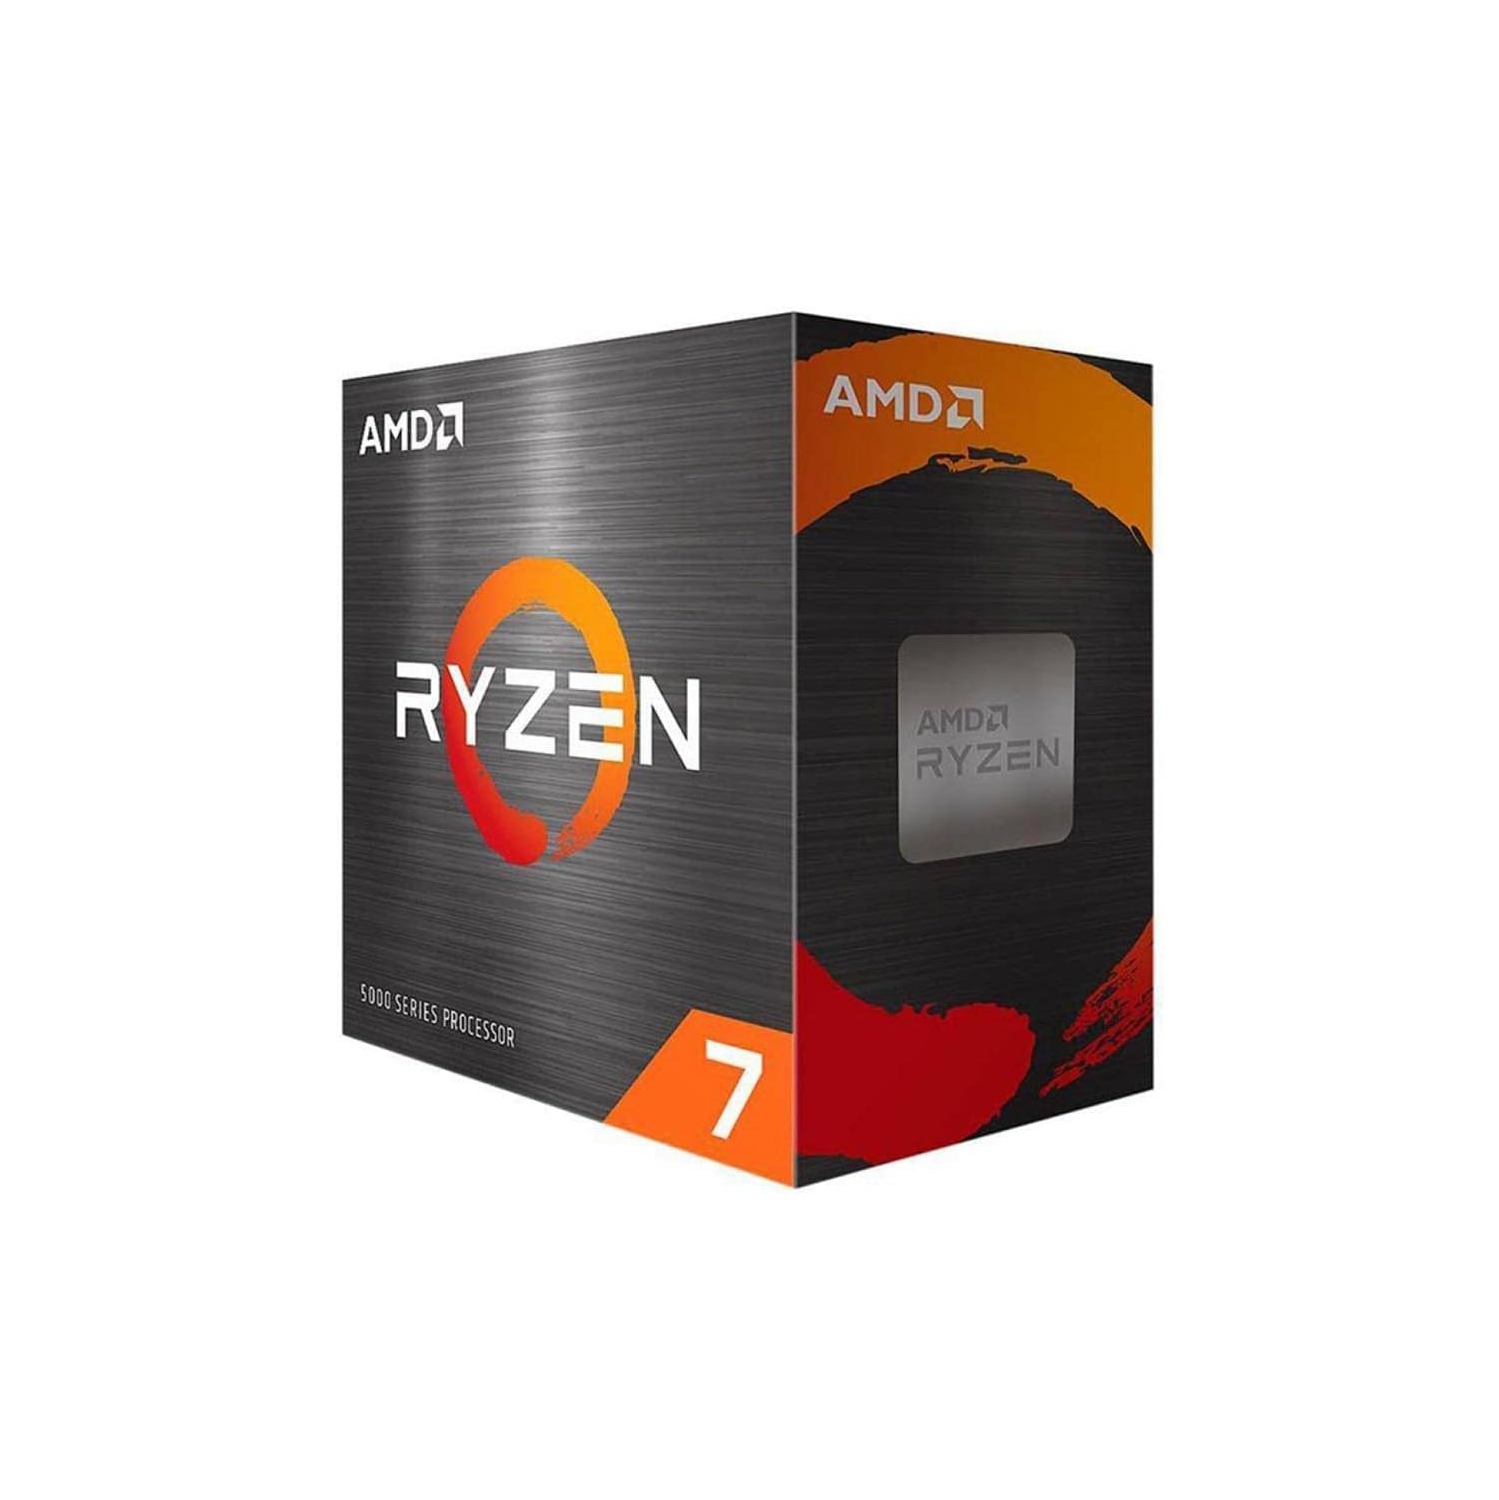 Refurbished (Good) AMD Ryzen 7 5700G Desktop Processor Unlocked 8 Cores upto 4.60 GHz AM4 Socket ( without cooler )